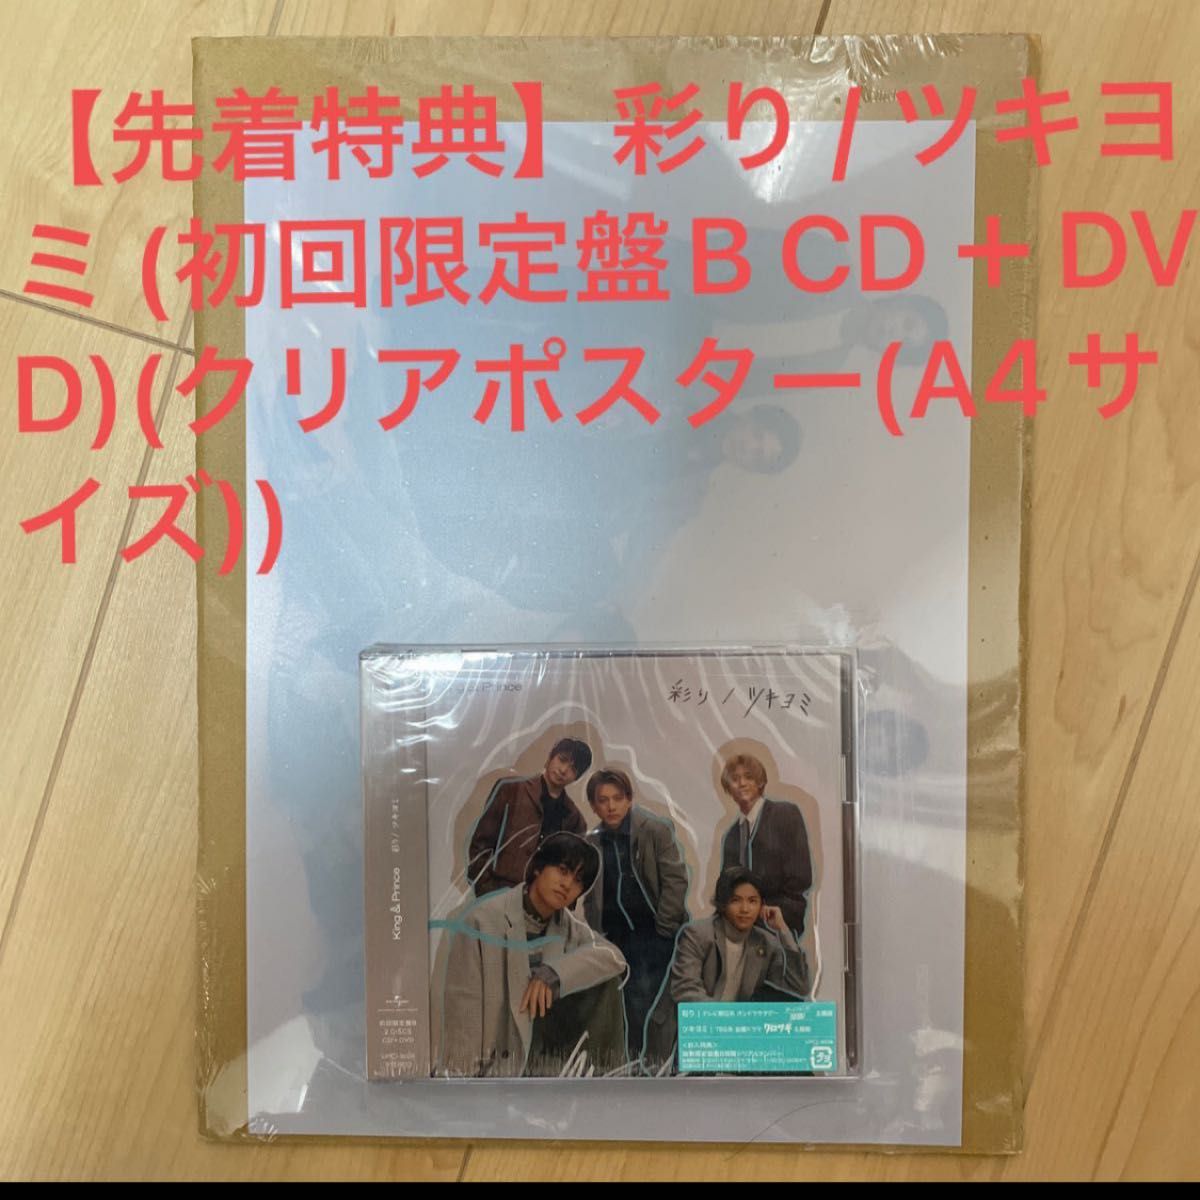 King & Prince 【先着特典】彩り / ツキヨミ (初回限定盤B CD＋DVD)(クリアポスター(A4サイズ))